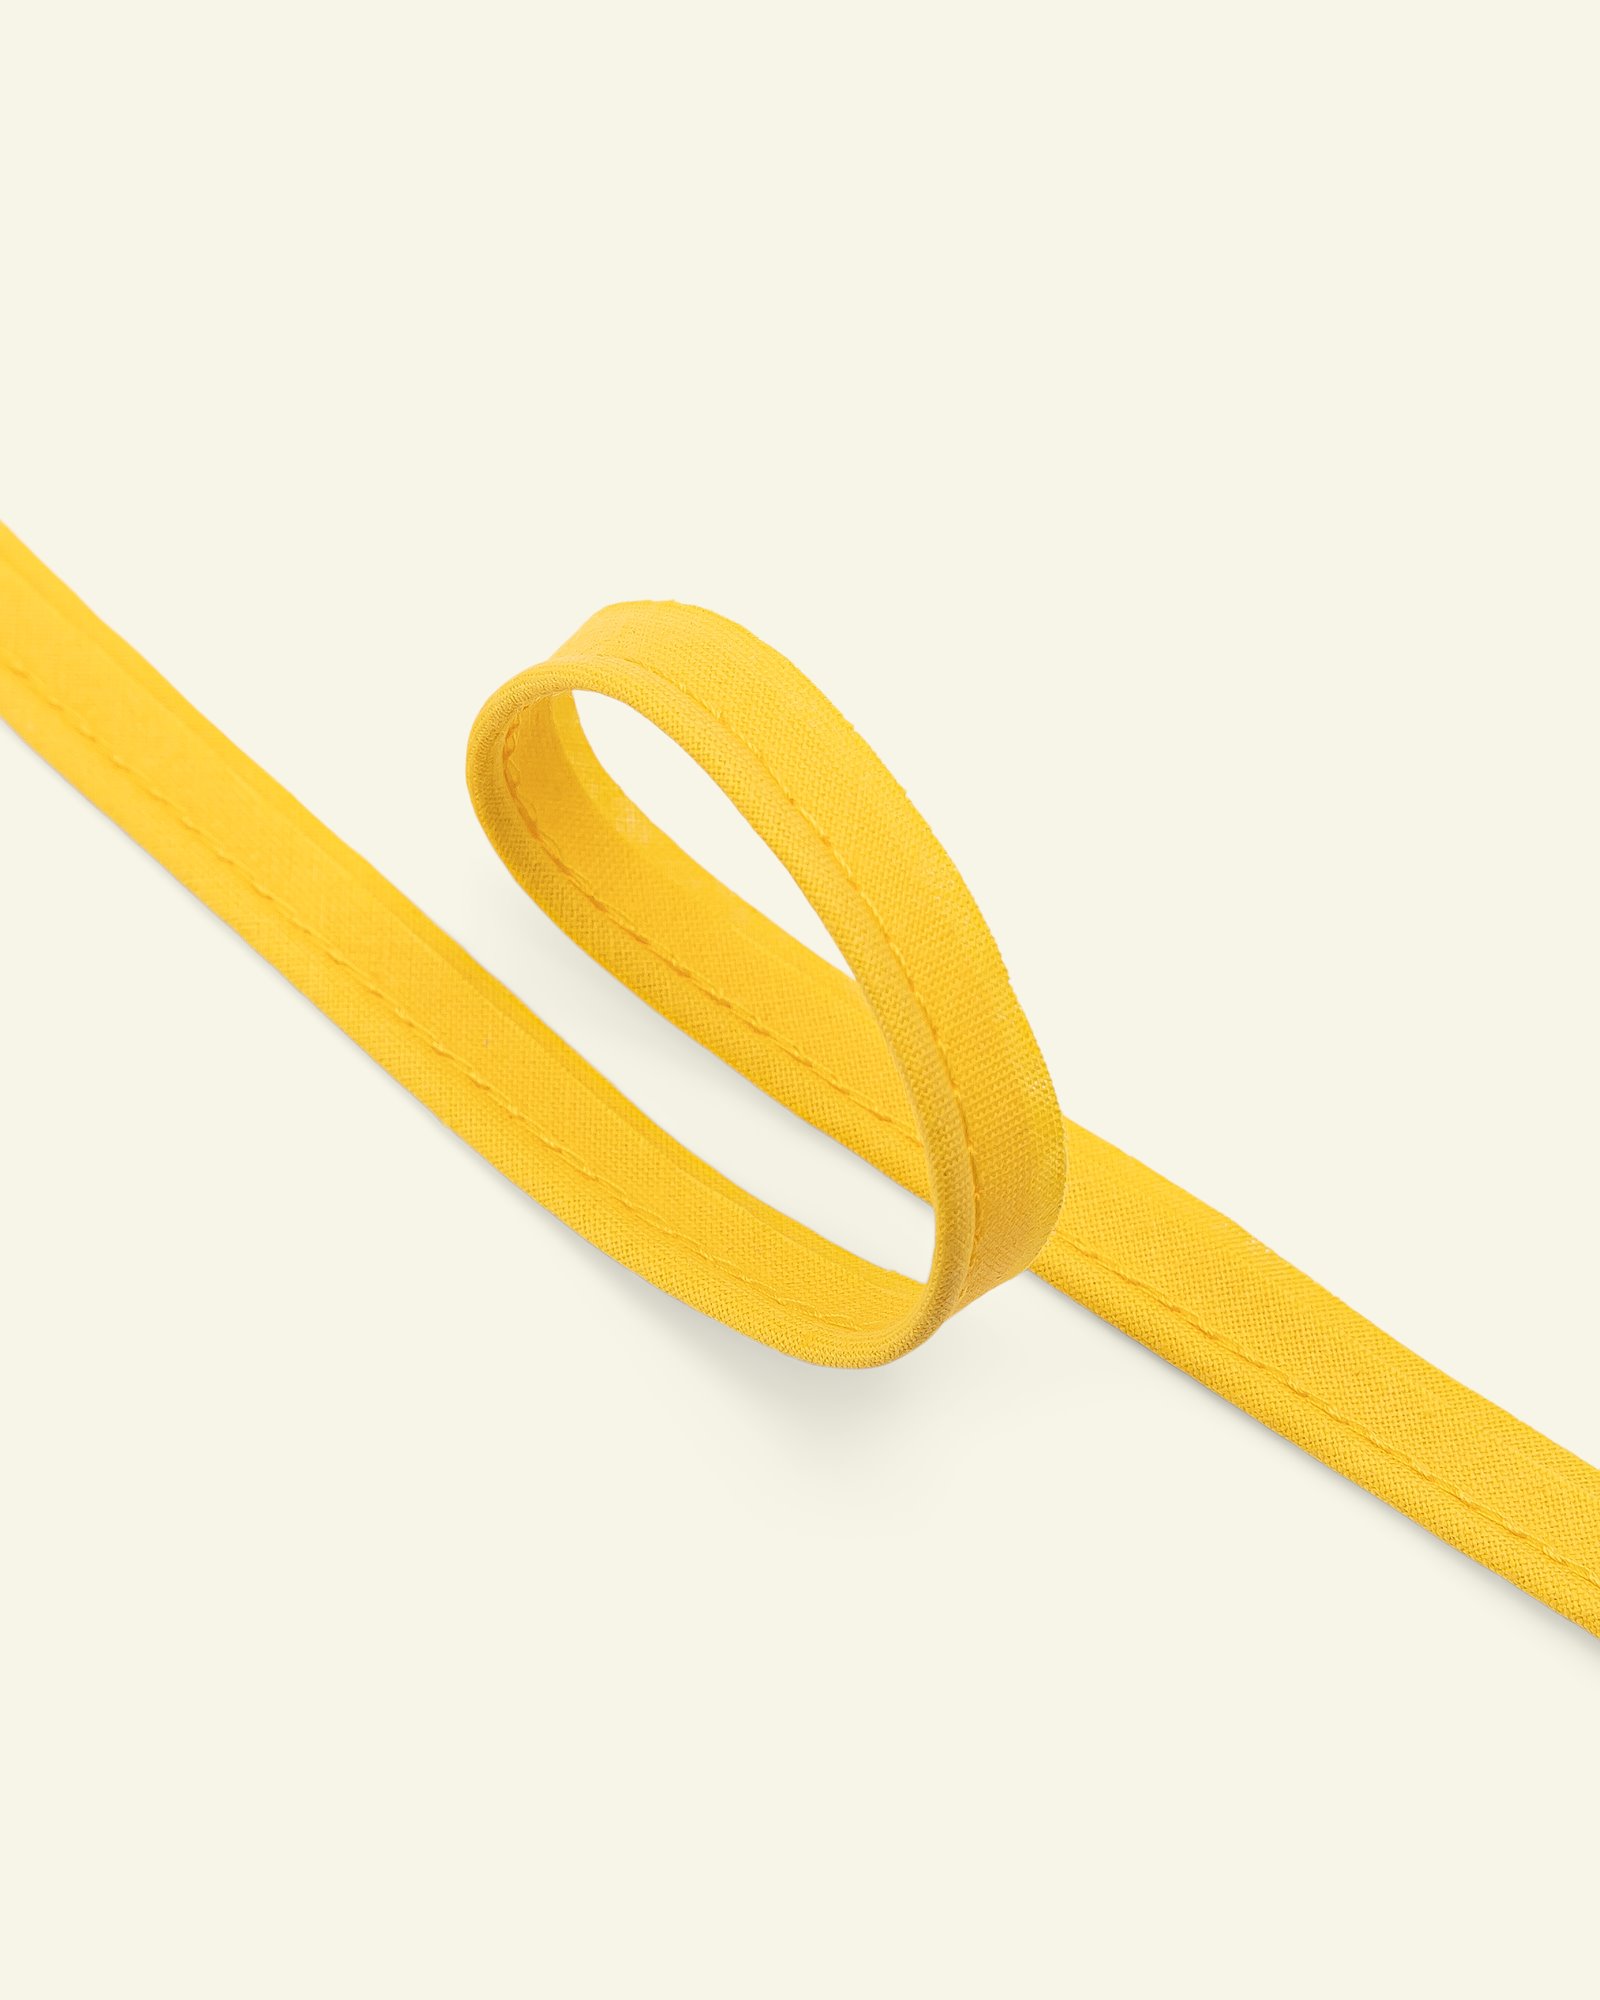 Piping ribbon cotton 4mm yellow 5m 71085_pack